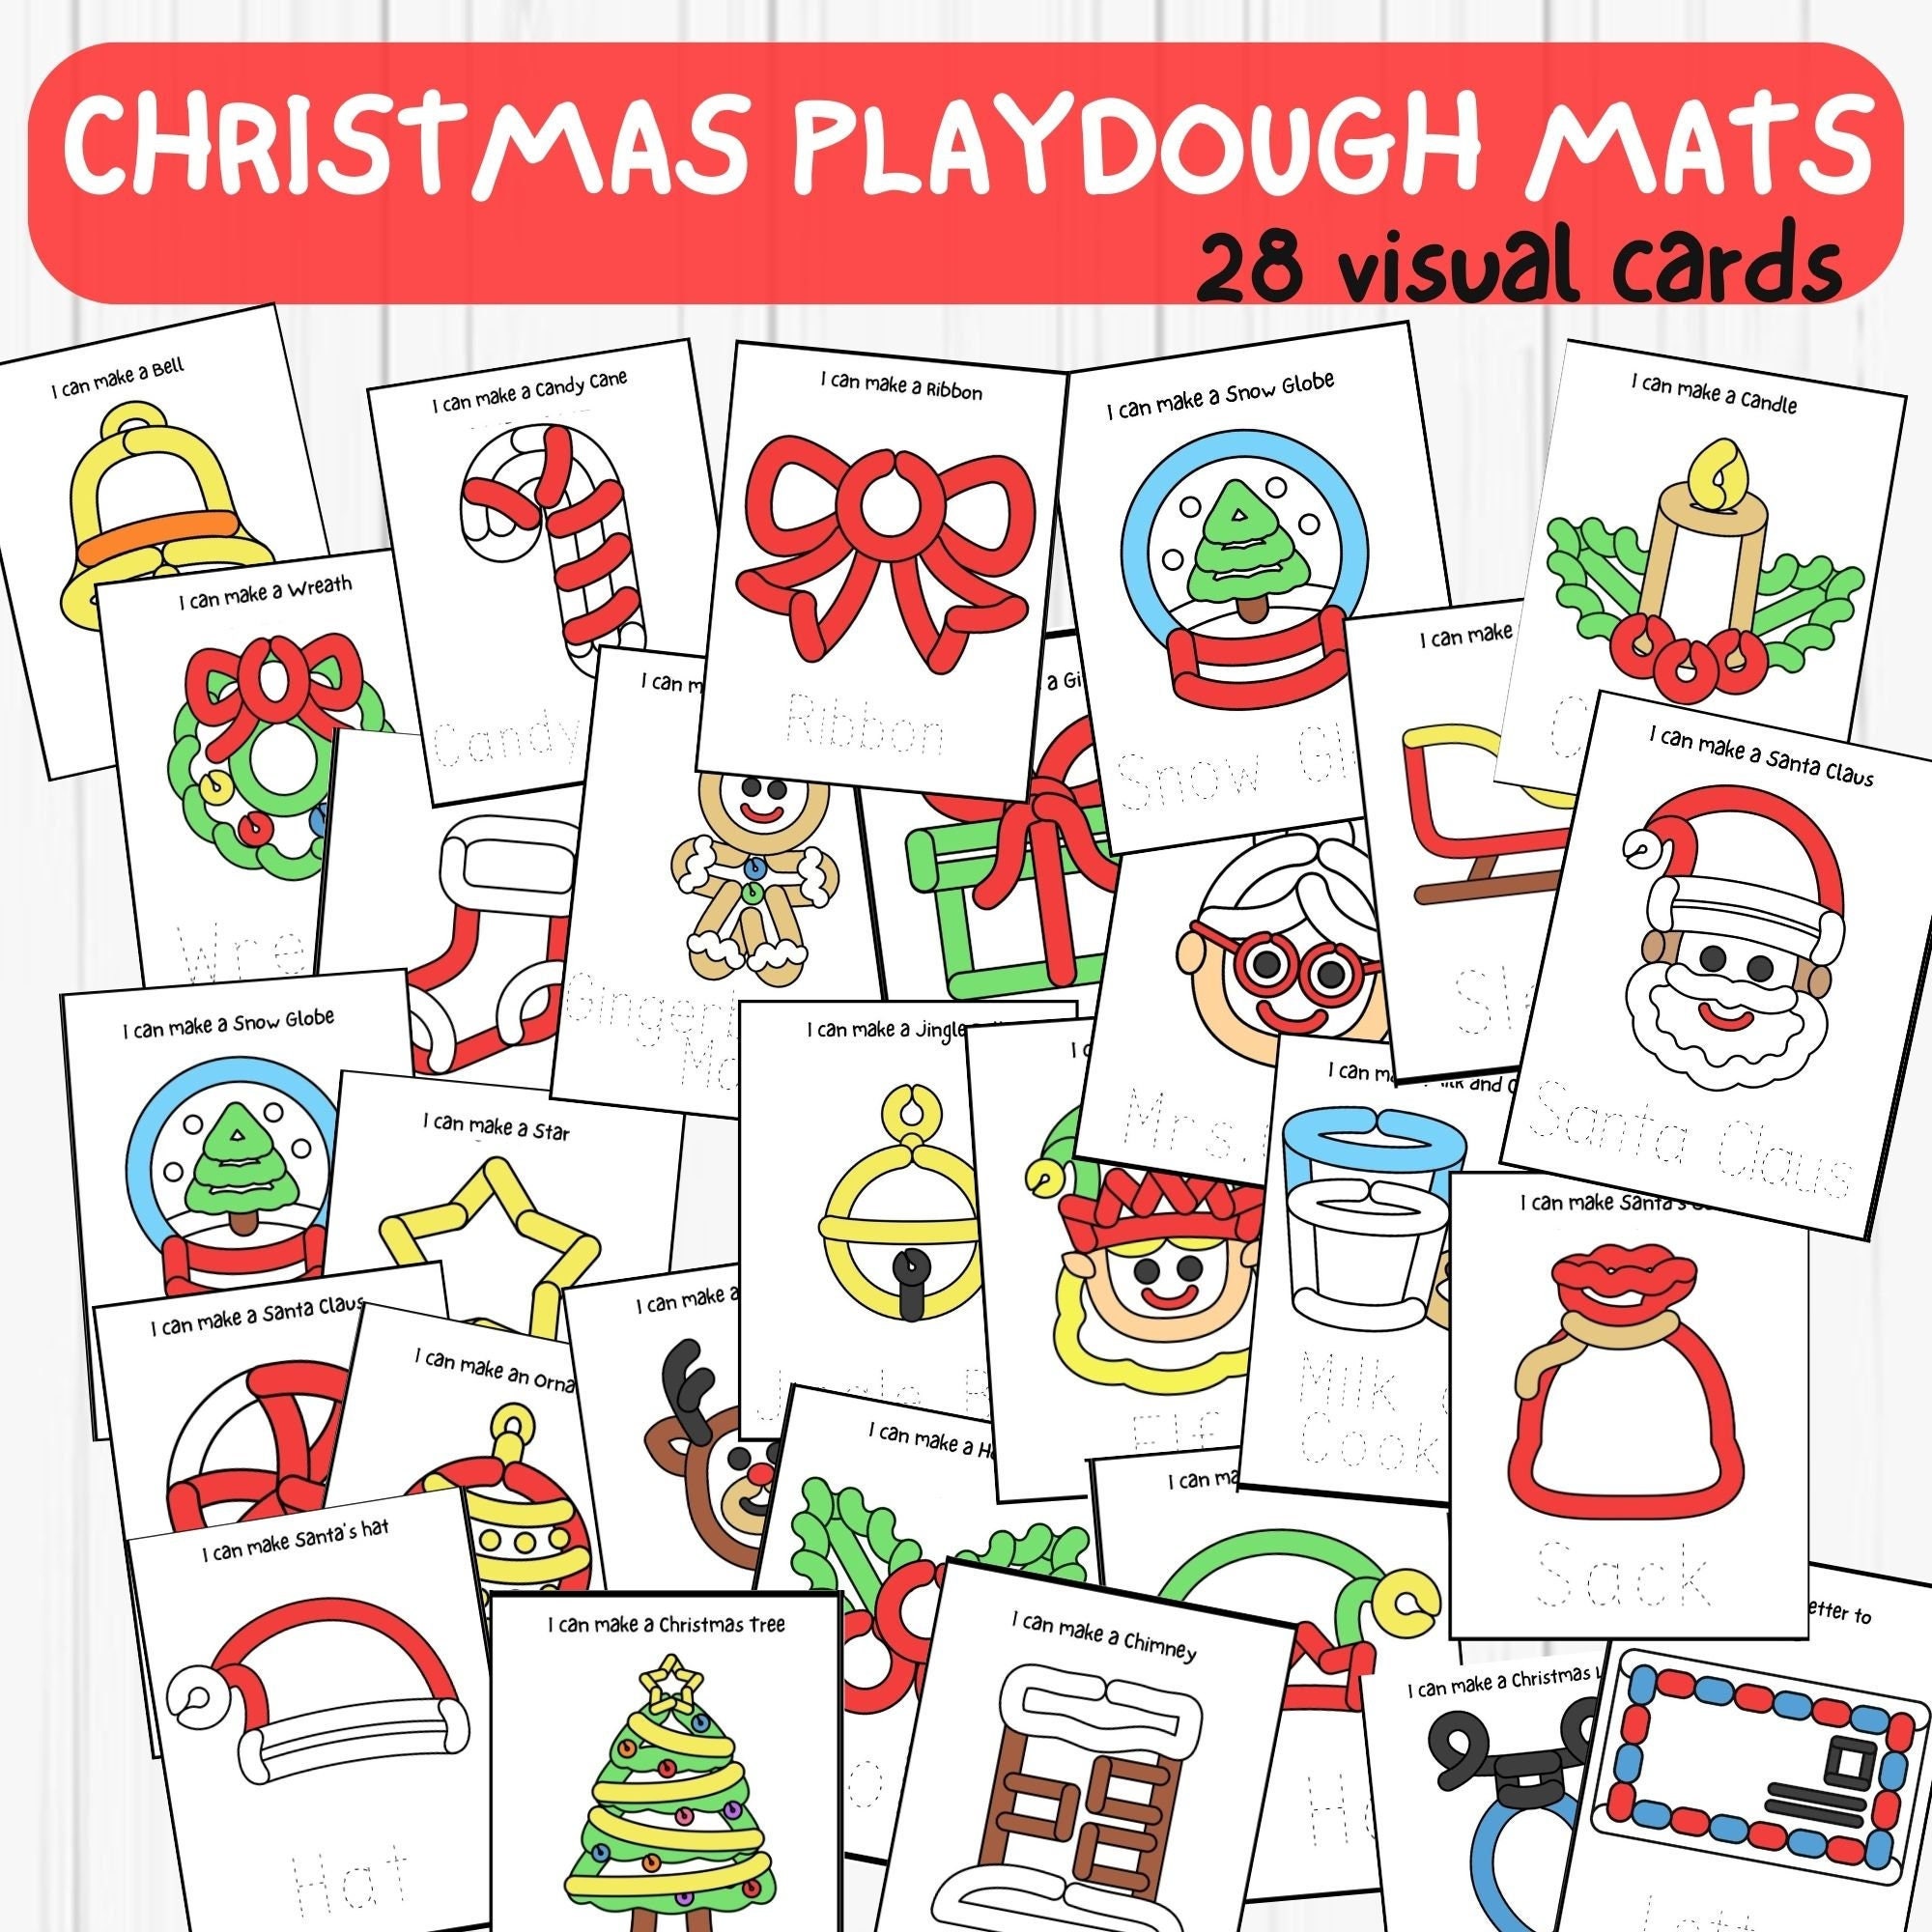 Play Dough Mats Preschool Activity Fun Printable for Kids 